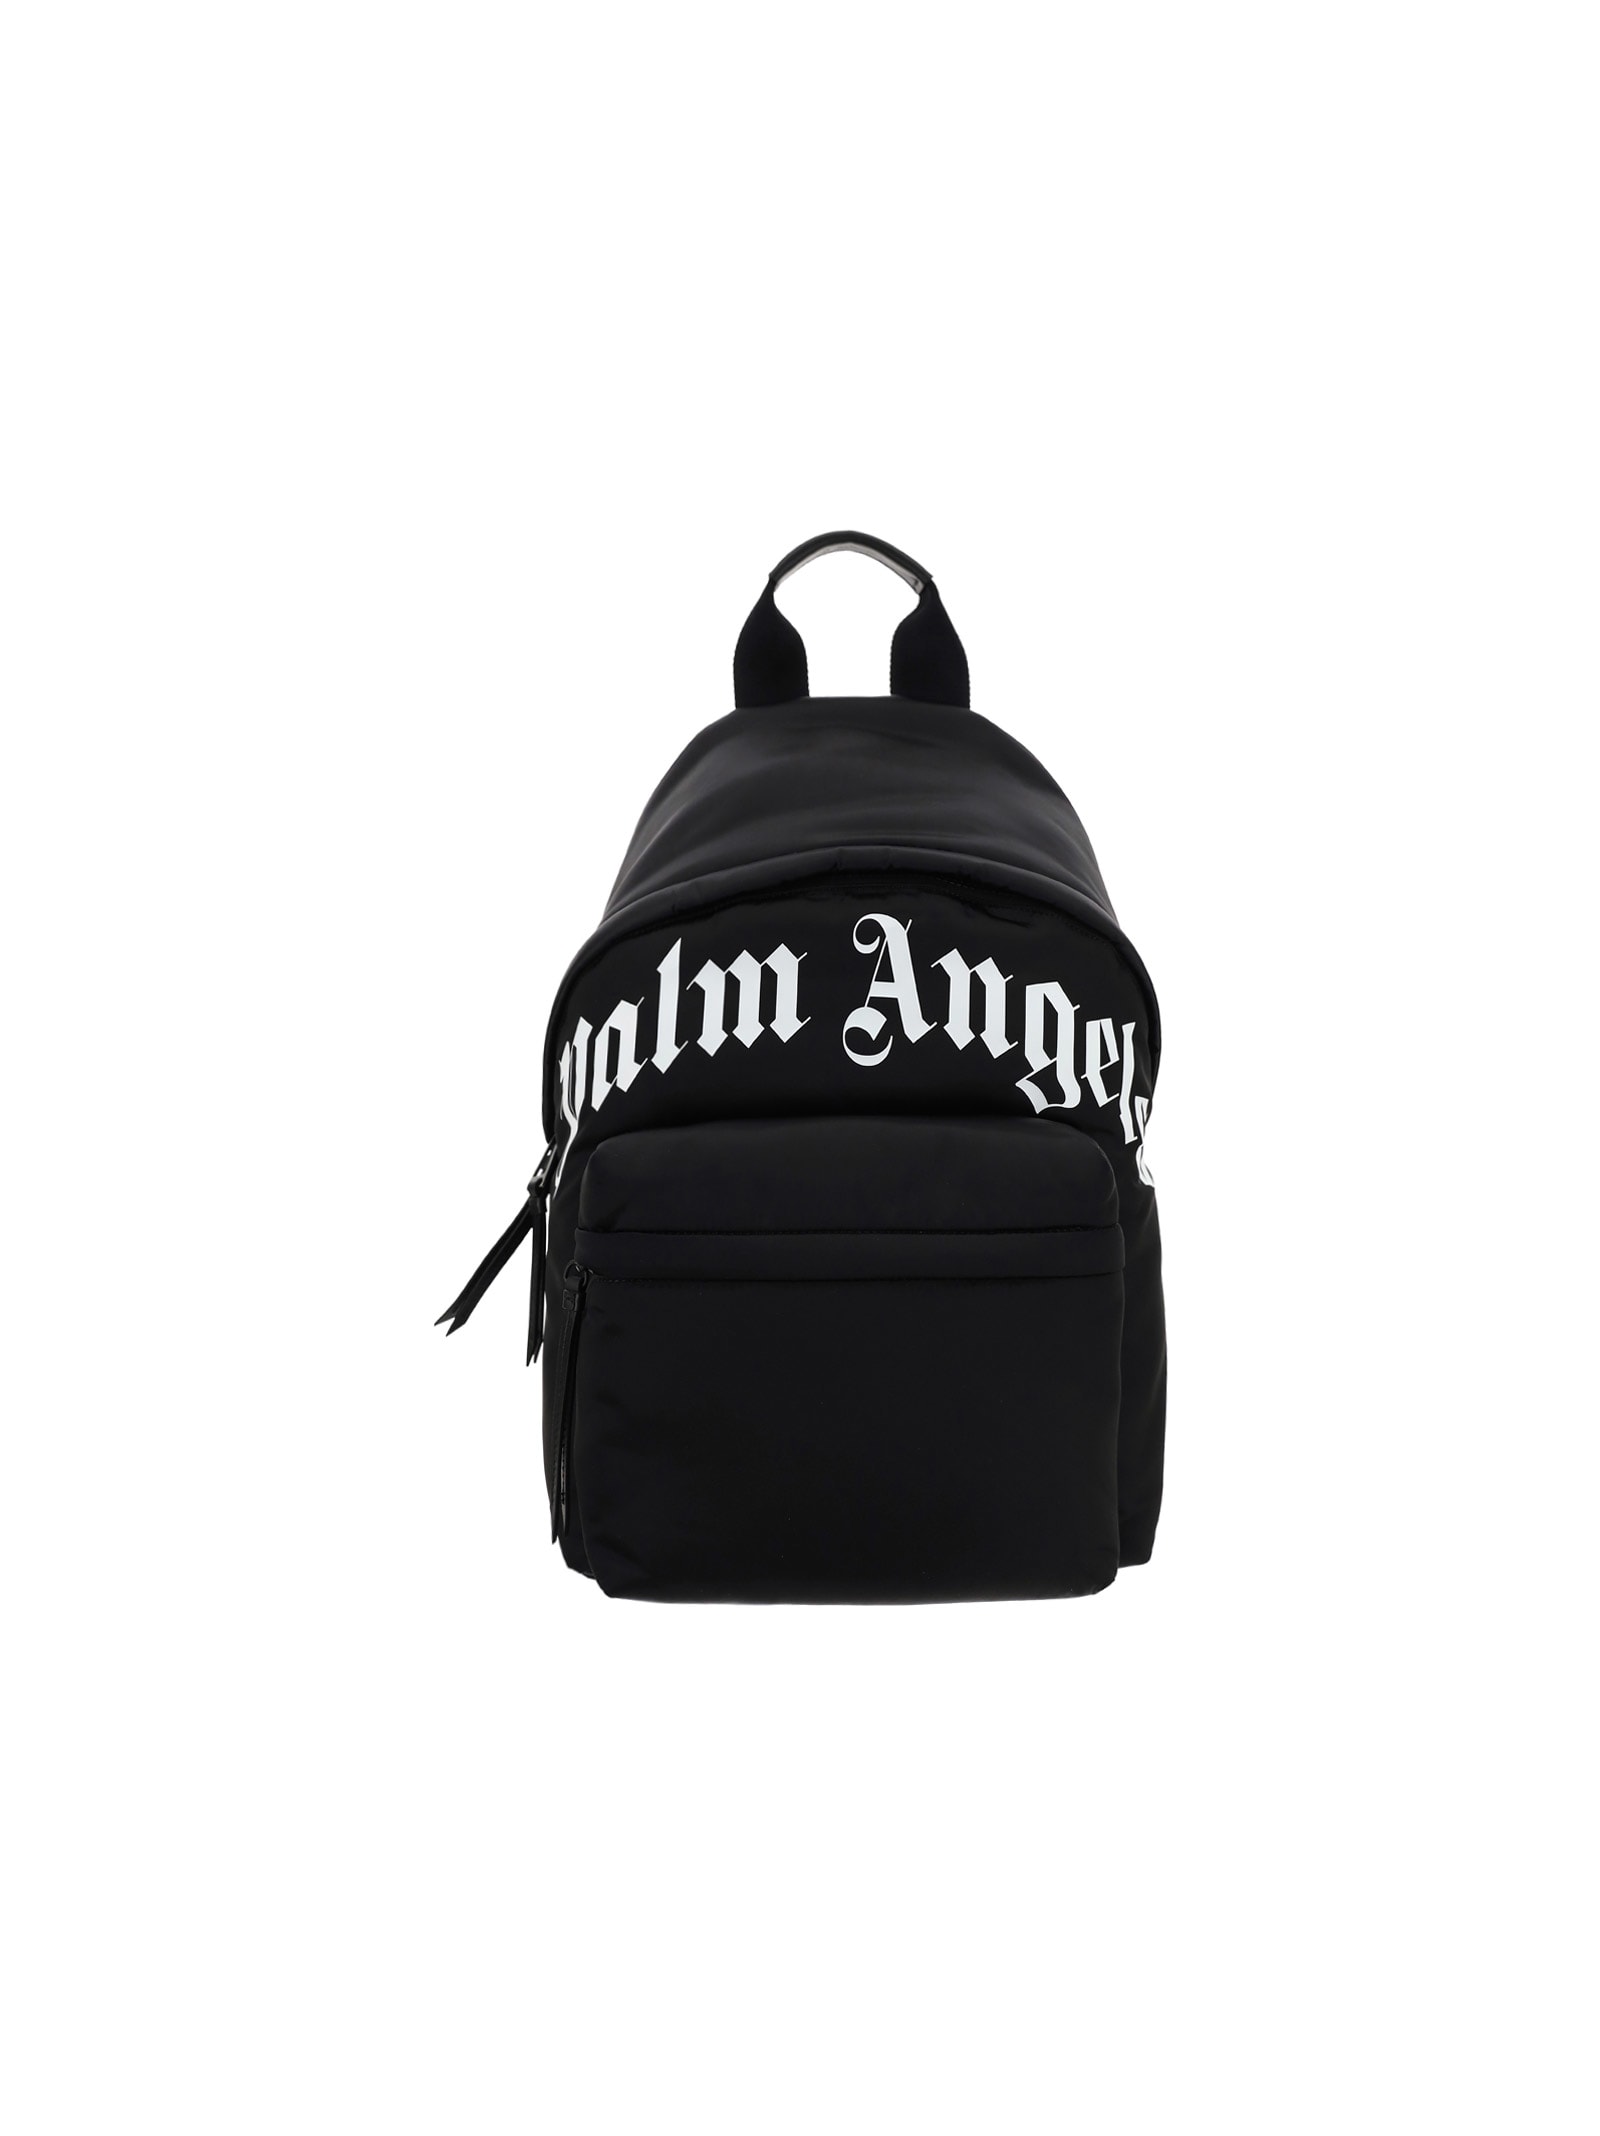 Palm Angels Backpack